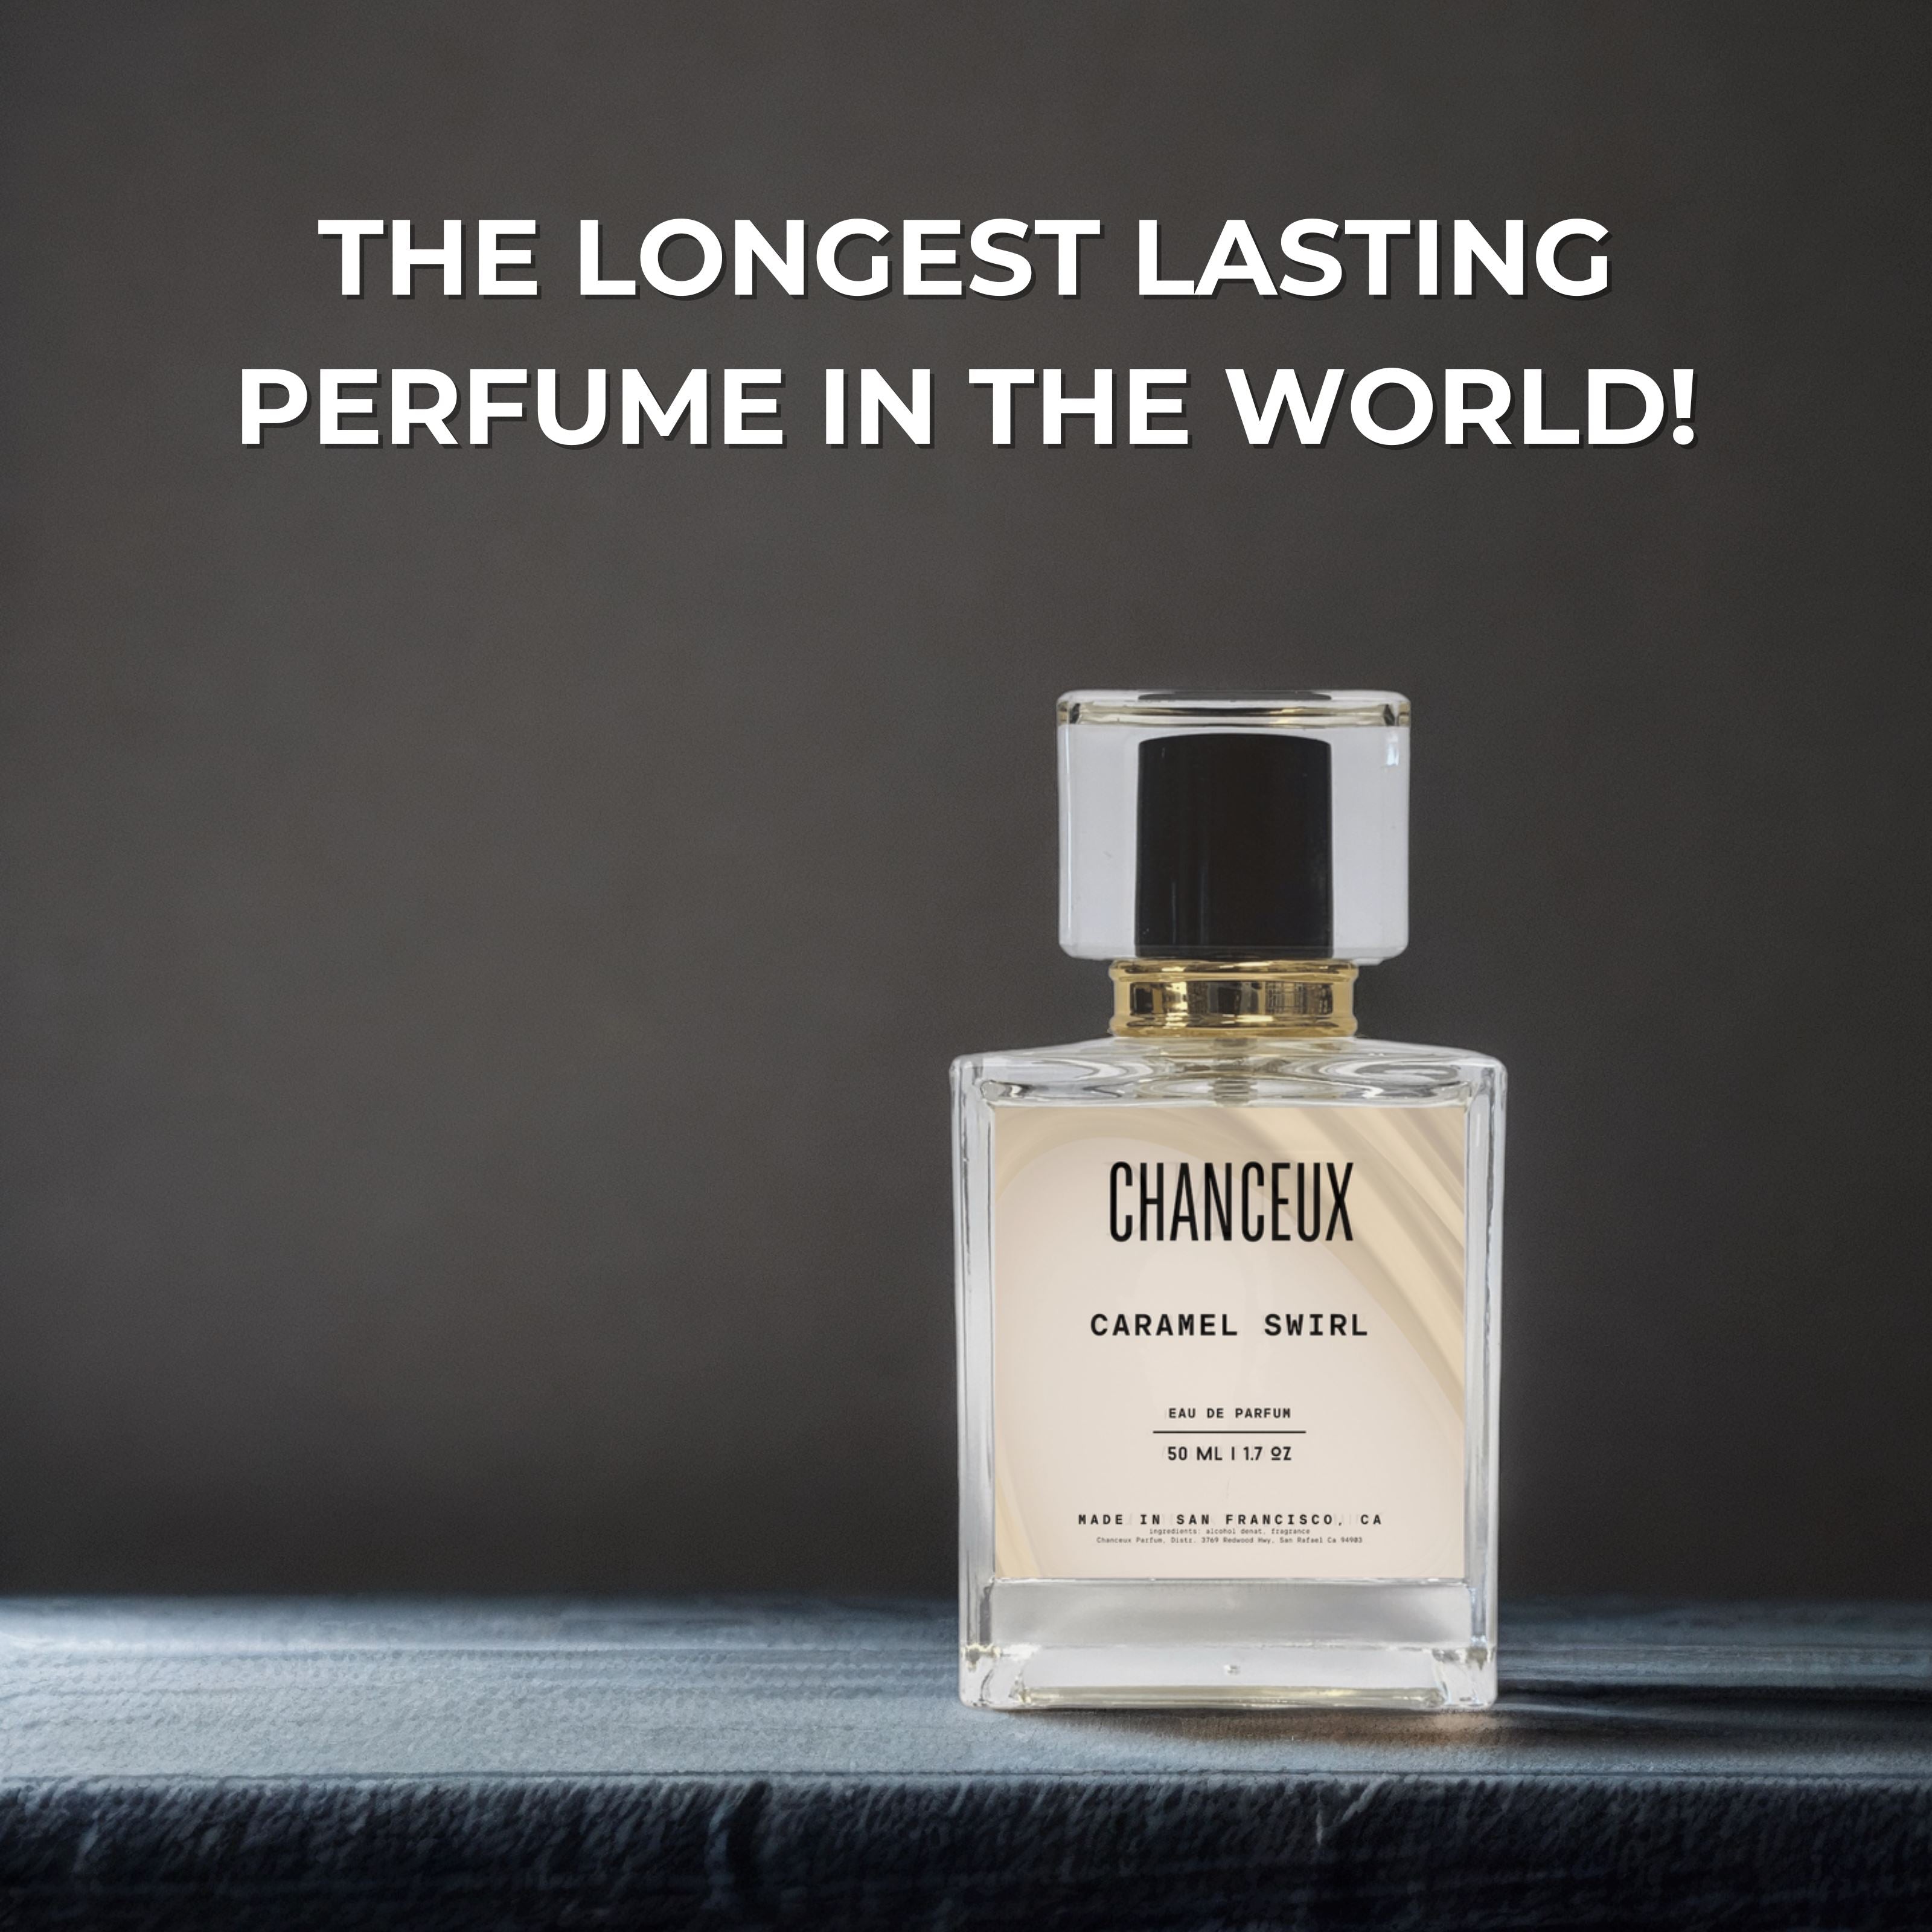 Caramel Swirl Perfume: The Art of Sweet Seduction